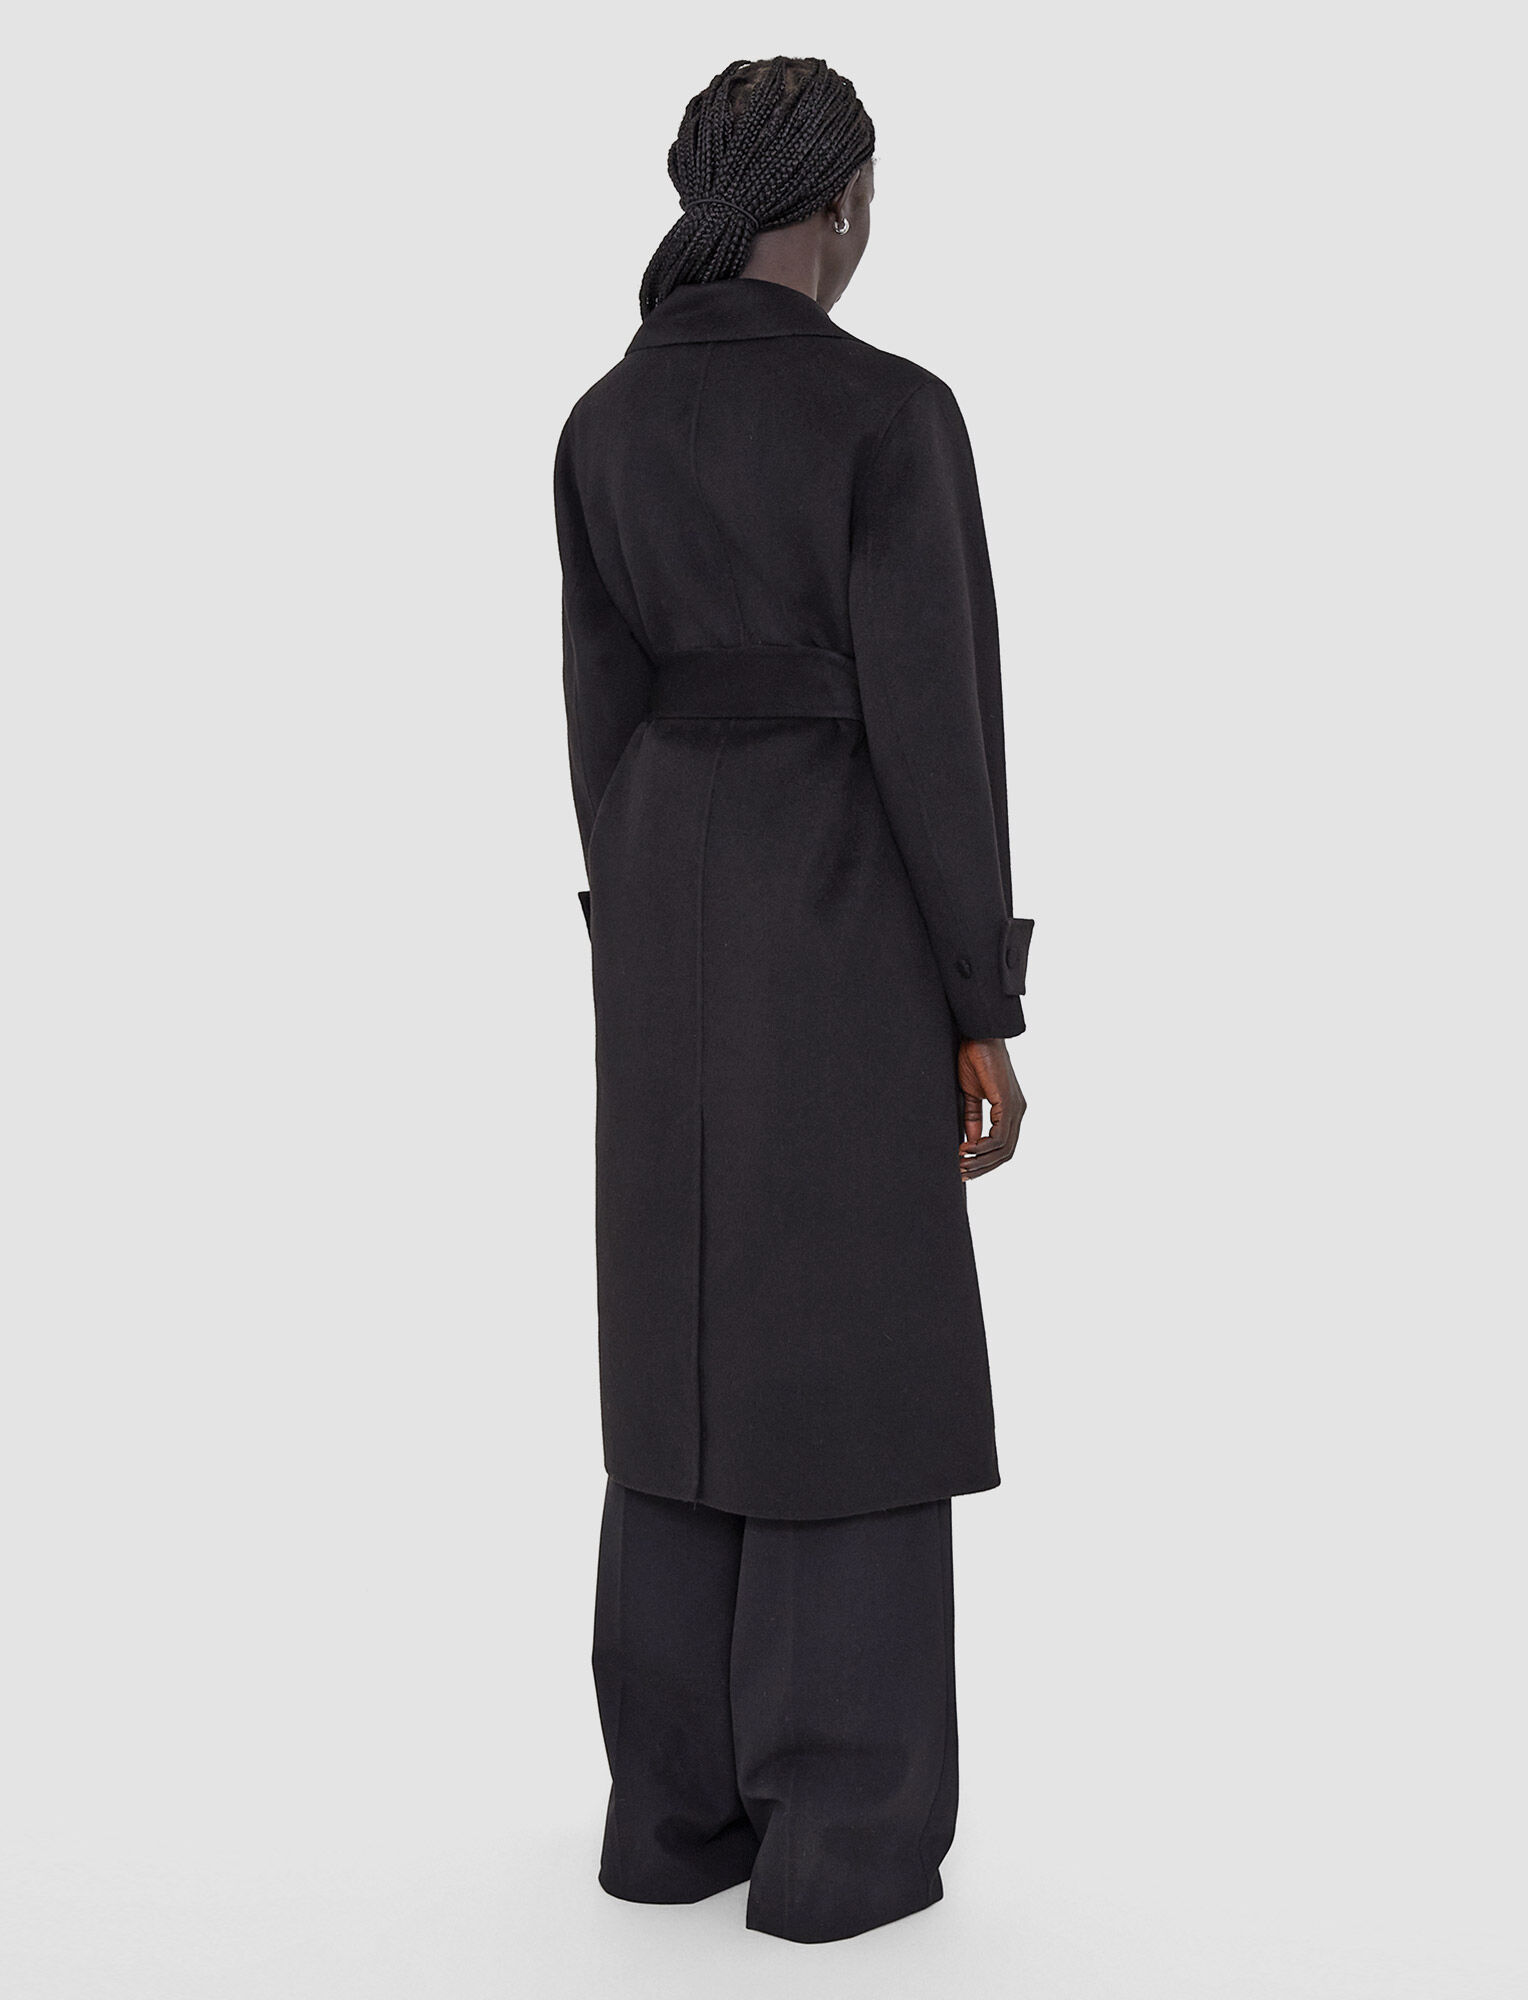 Joseph, Double Face Cashmere Arline Coat, in Black